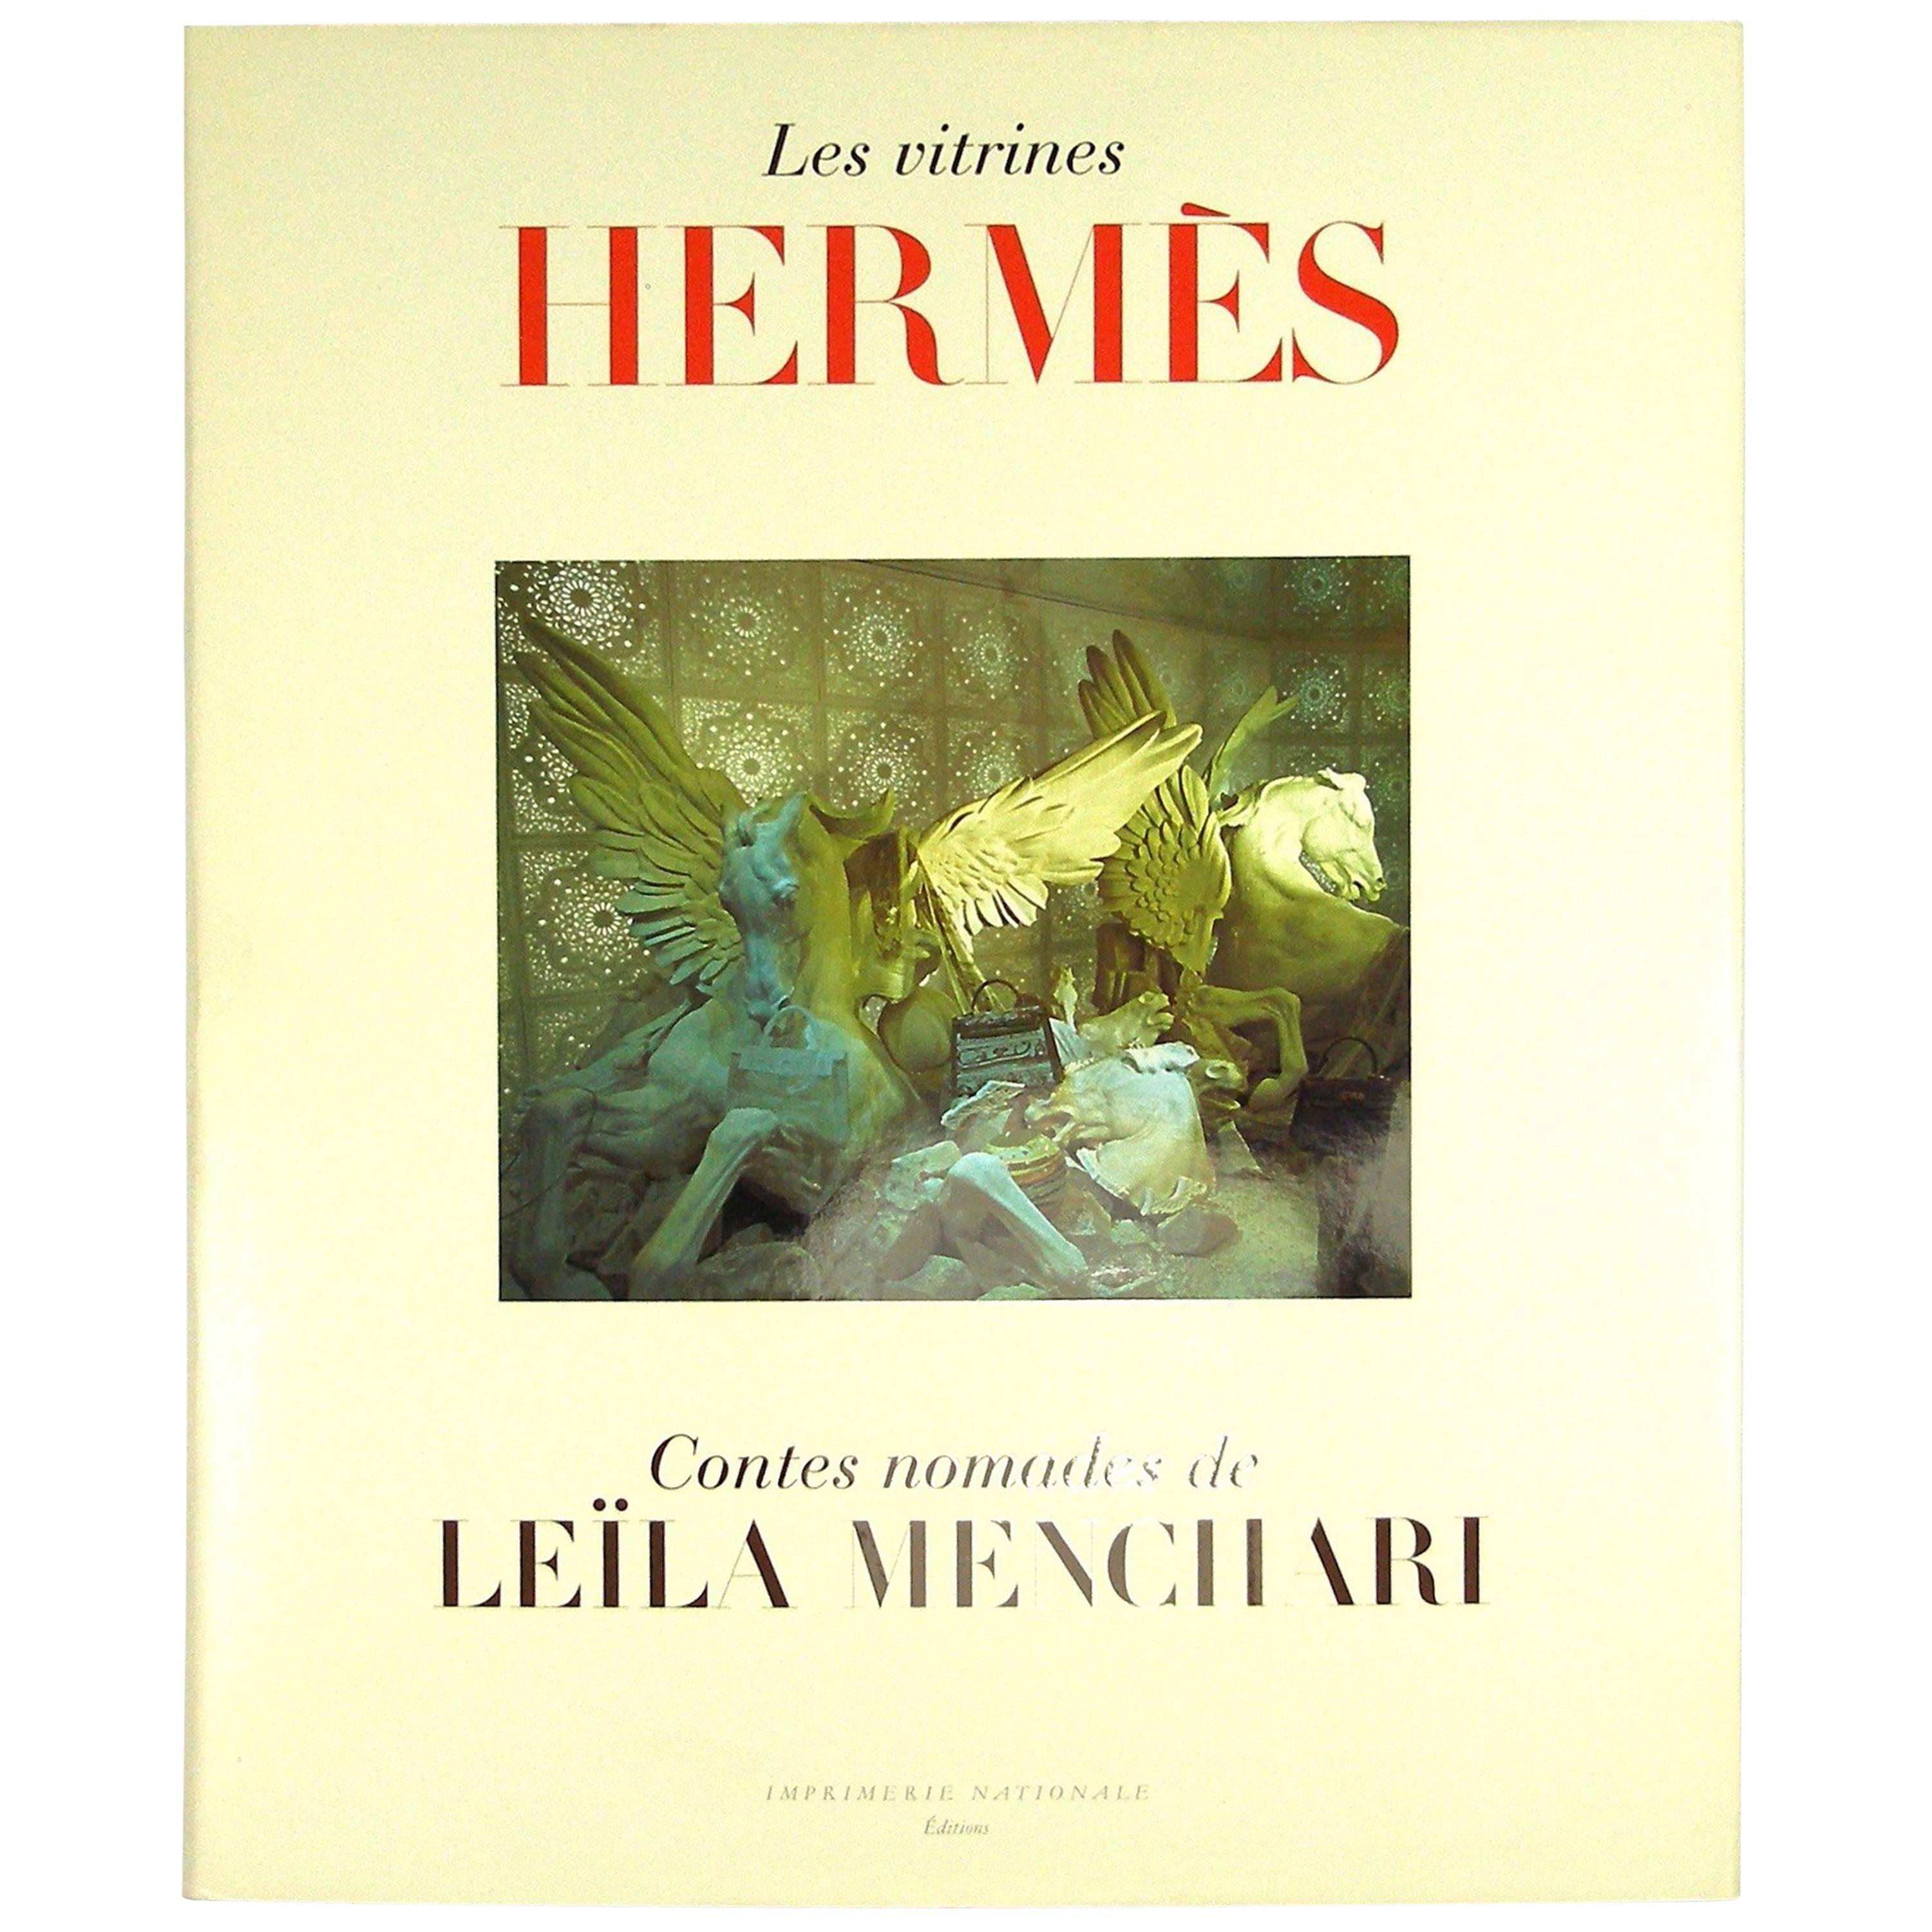 RARE HERMES Les Vitrines Hermes Contes Nomades Leila Menchari Book For Sale